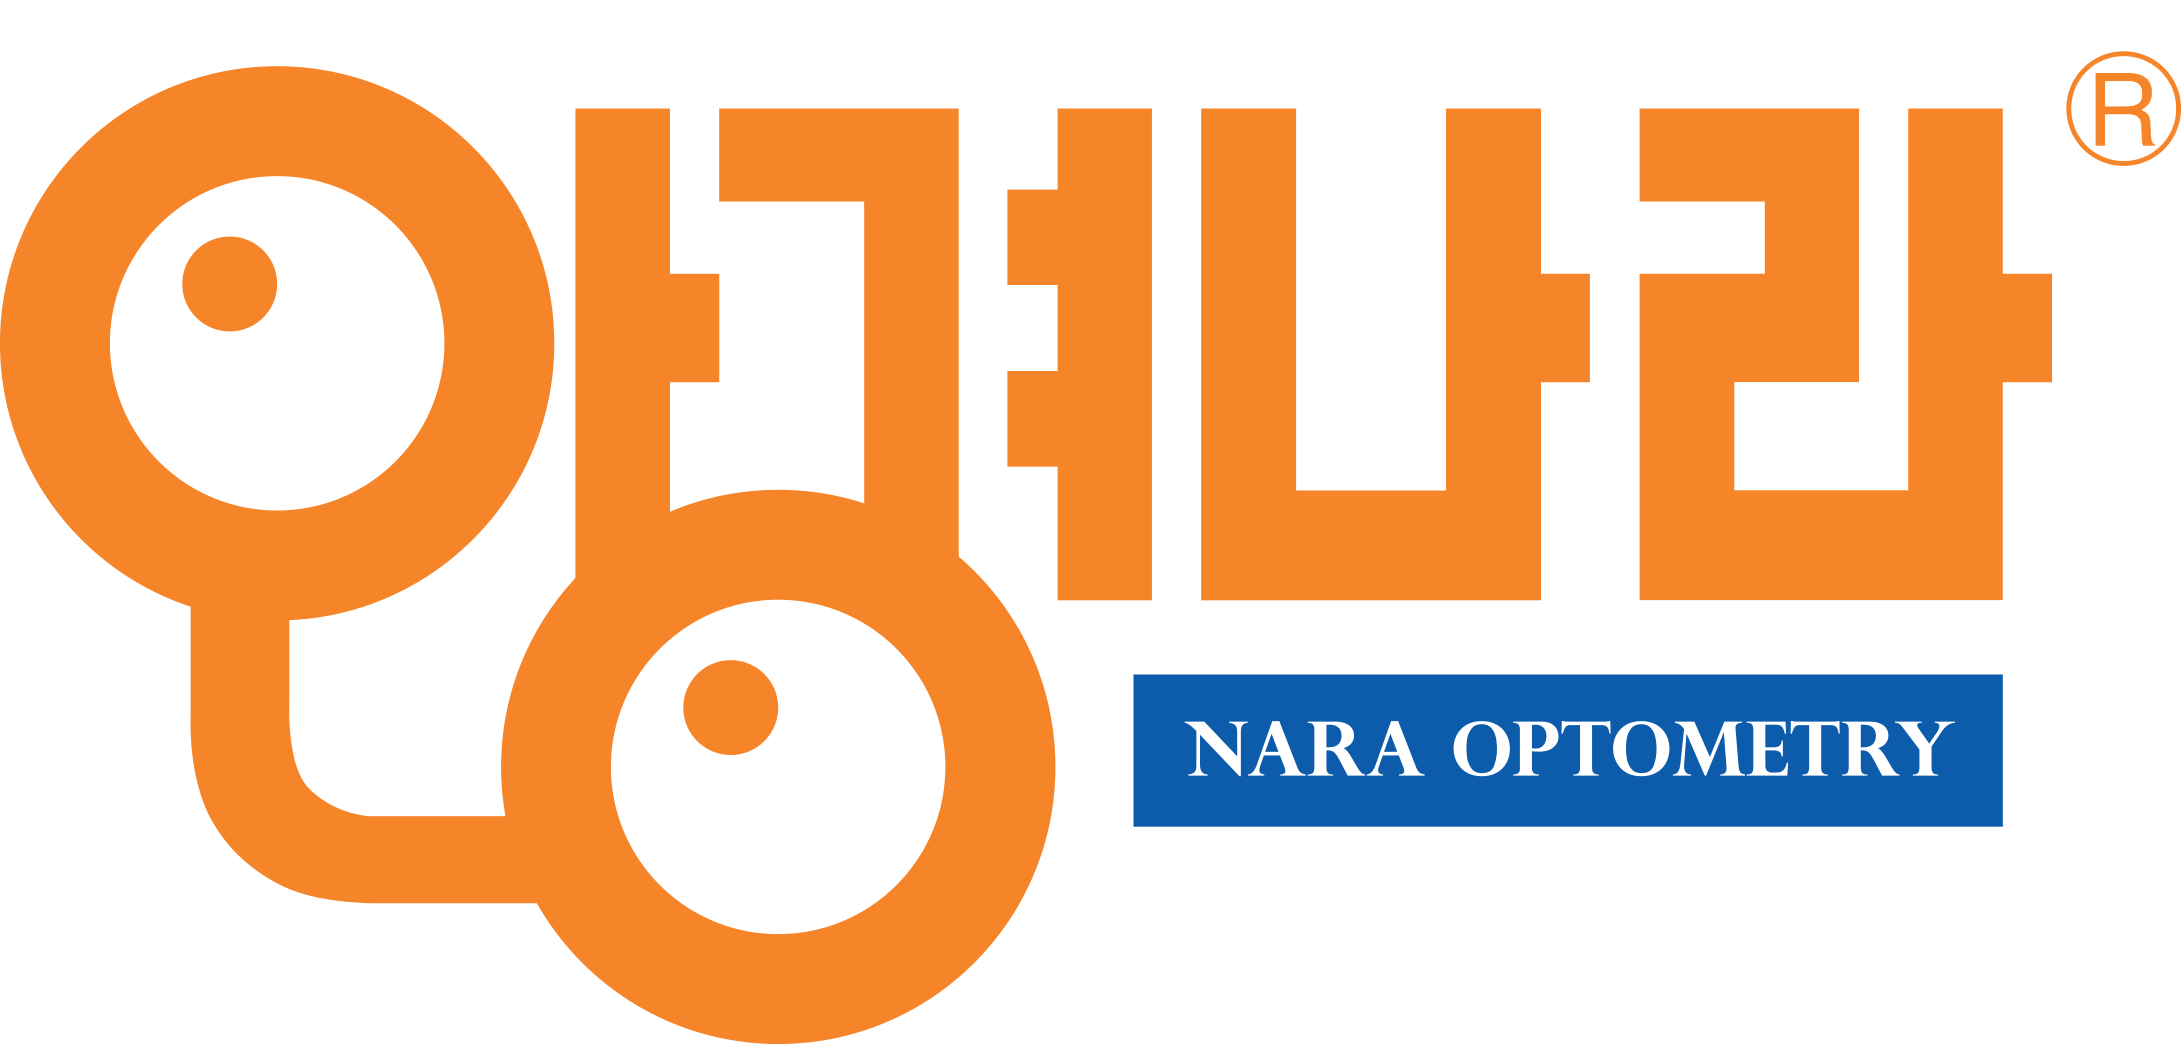 Nara Optometry